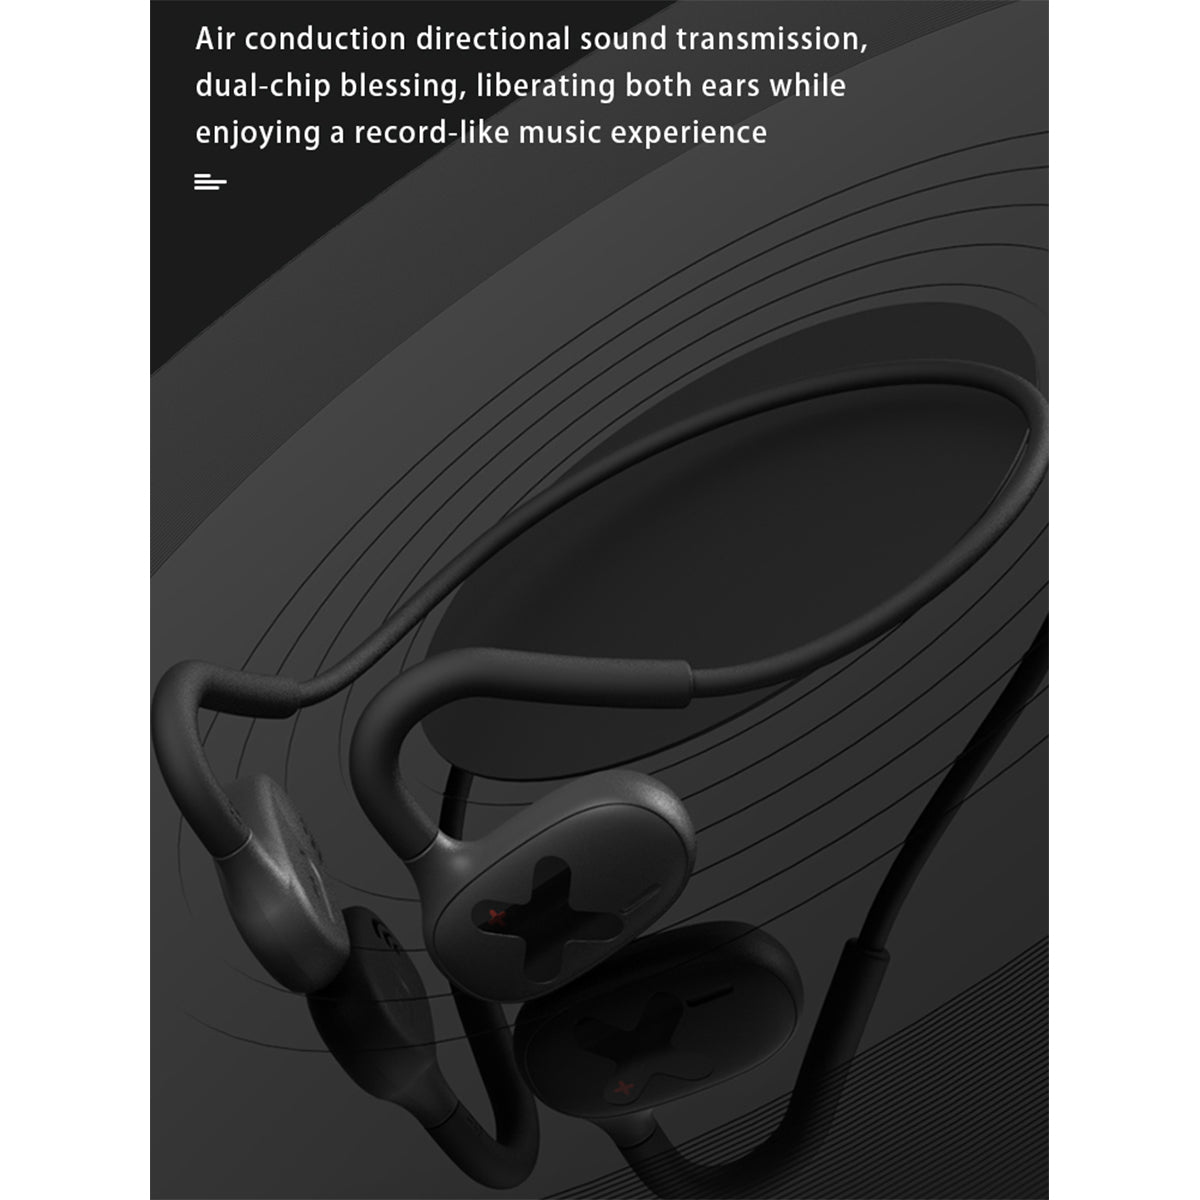 O2W SELECTION DMOOSTER D24 Magnetic Charging Design Bluetooth Earphones, Black